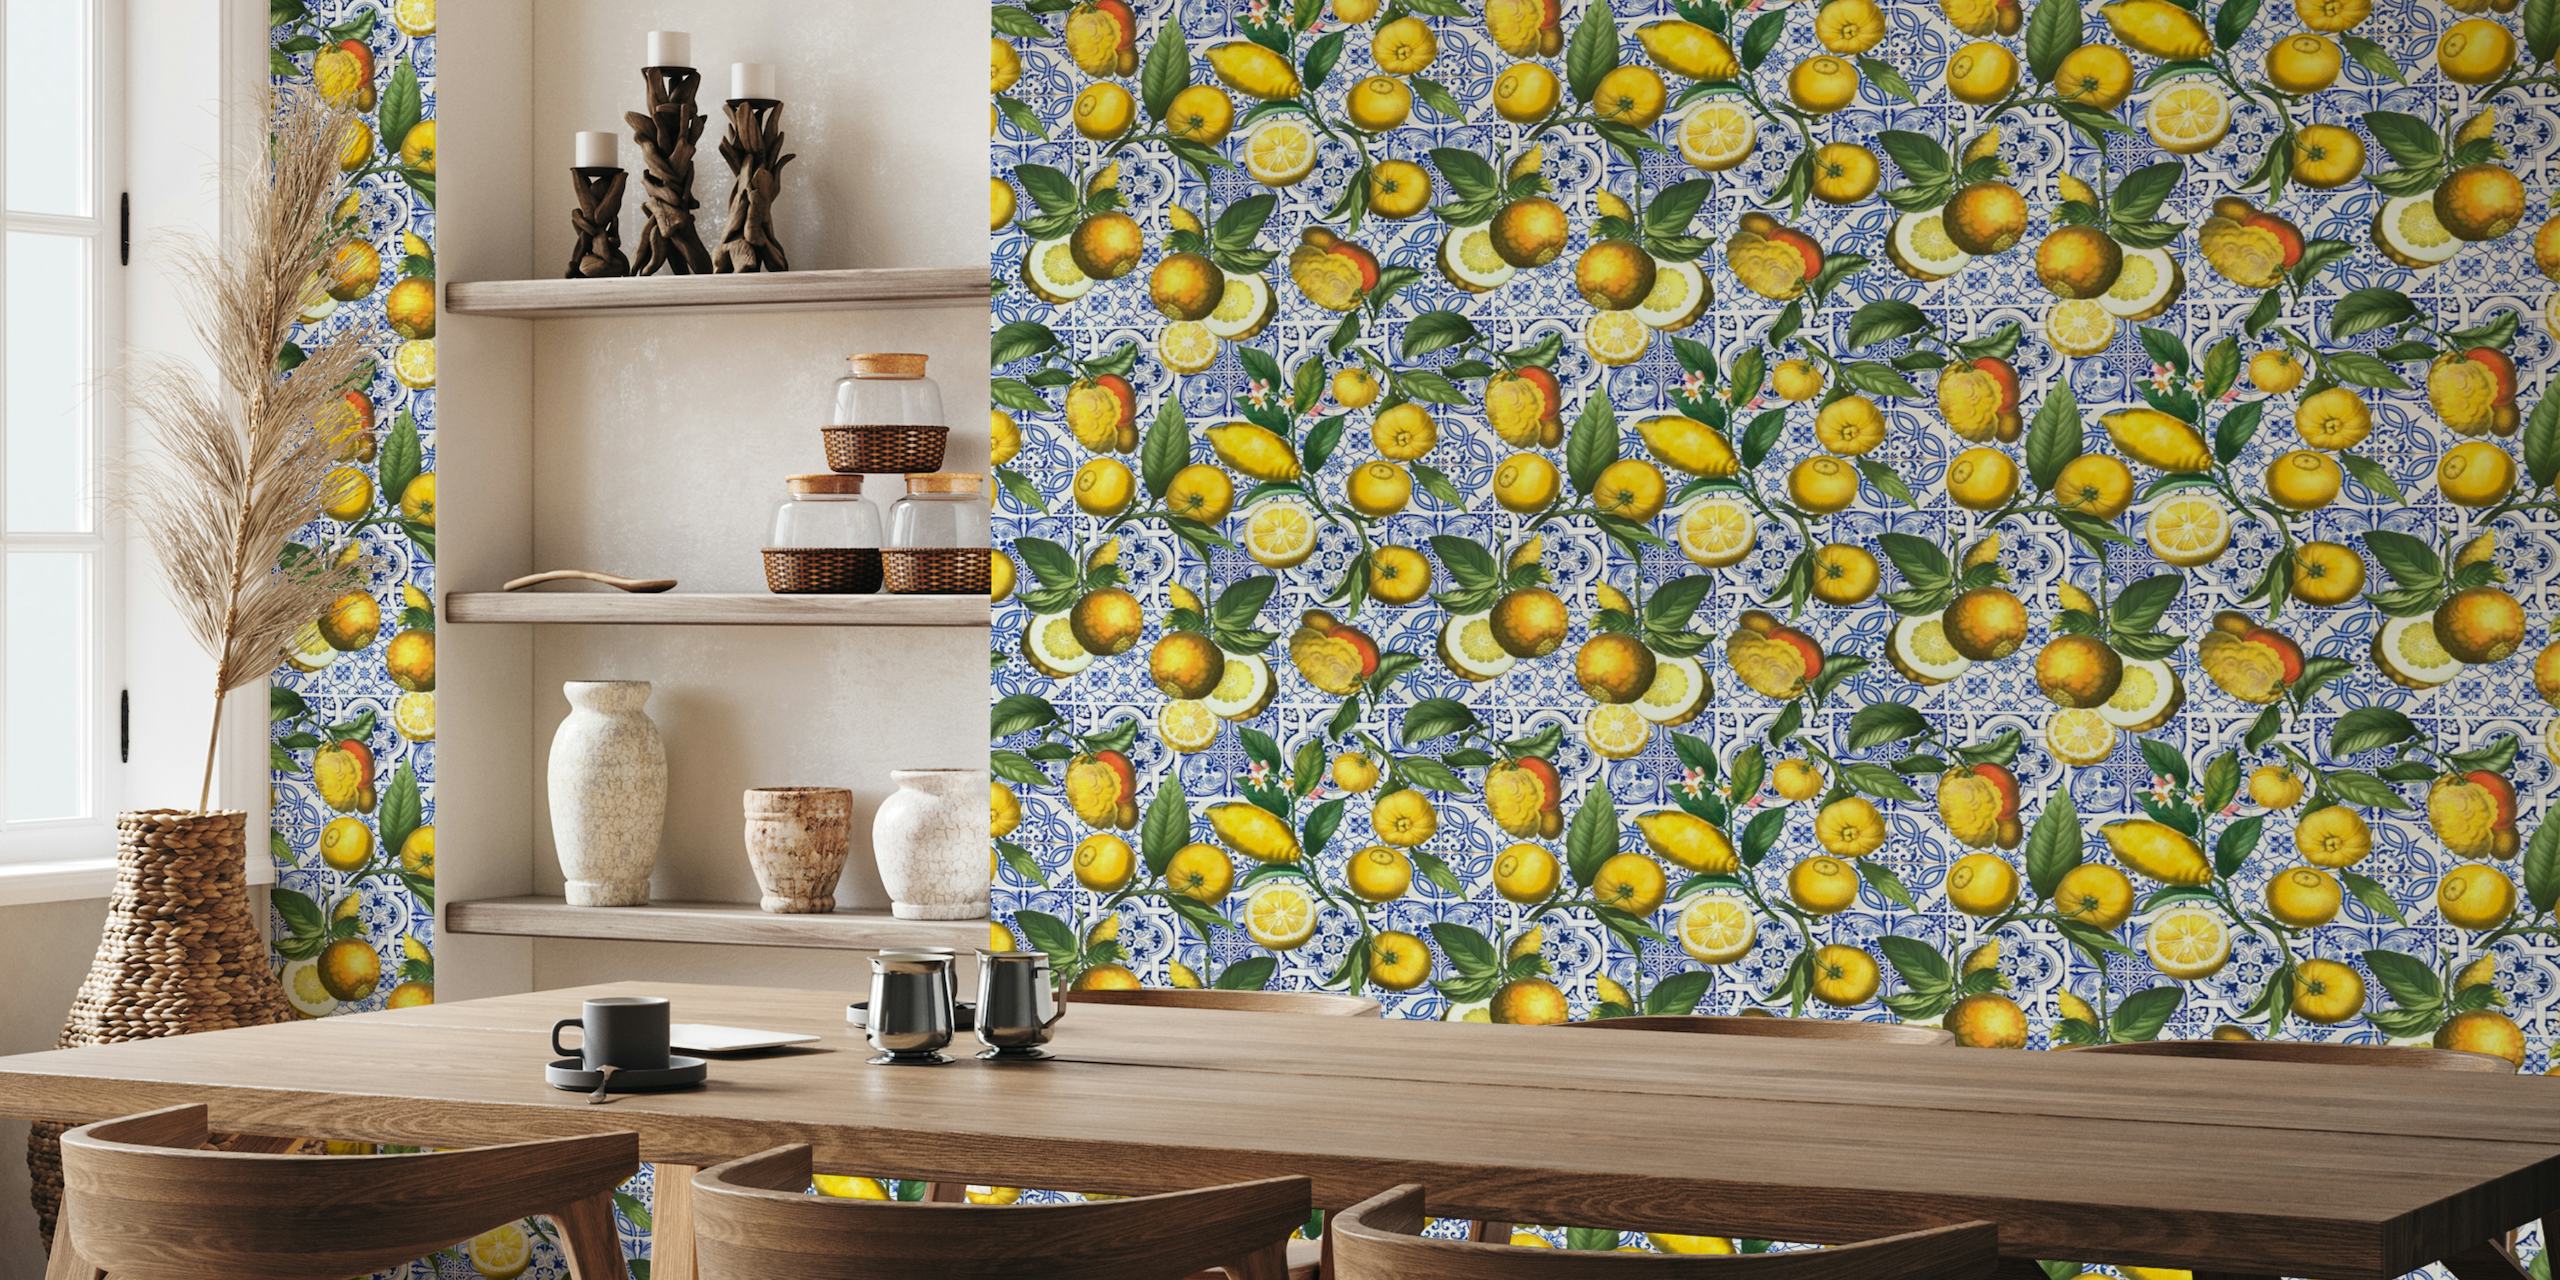 Lemon Fruits And Tiles wallpaper